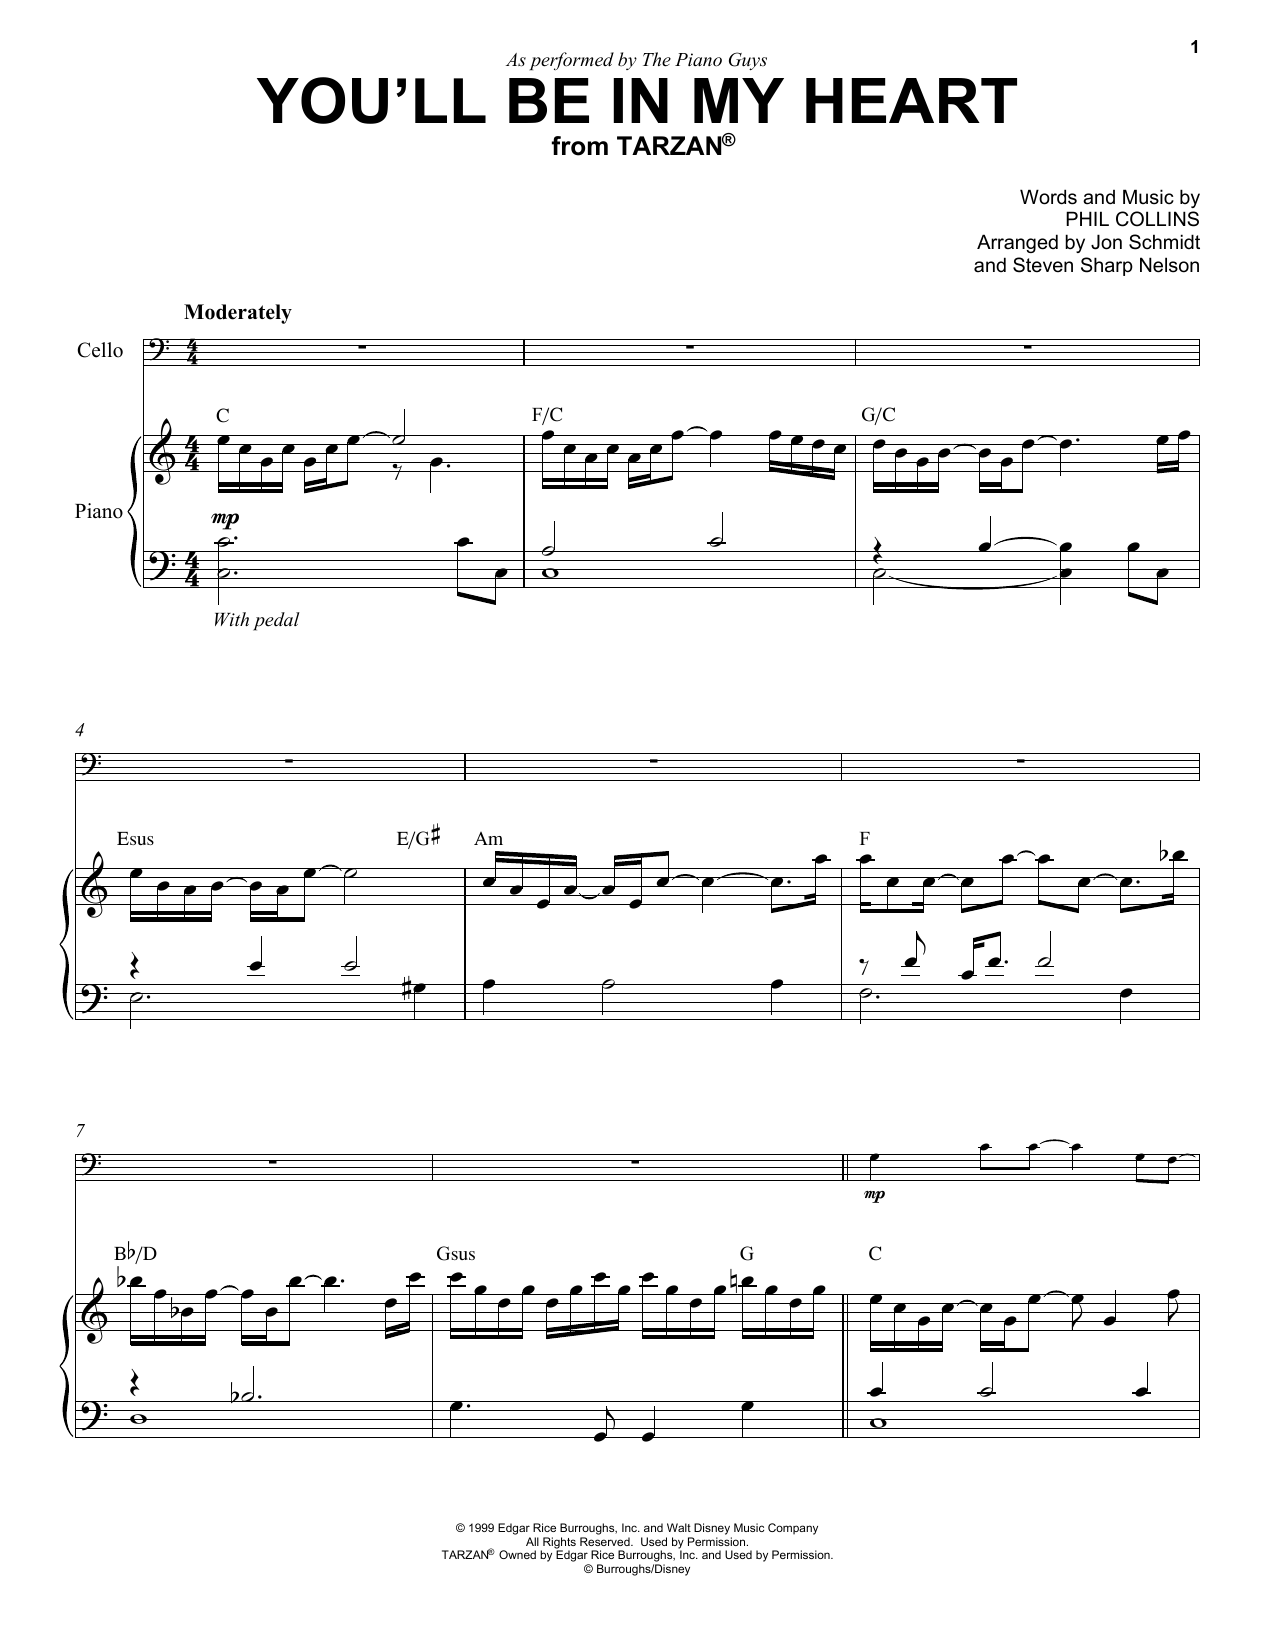 Download The Piano Guys You'll Be In My Heart (from Tarzan) Sheet Music